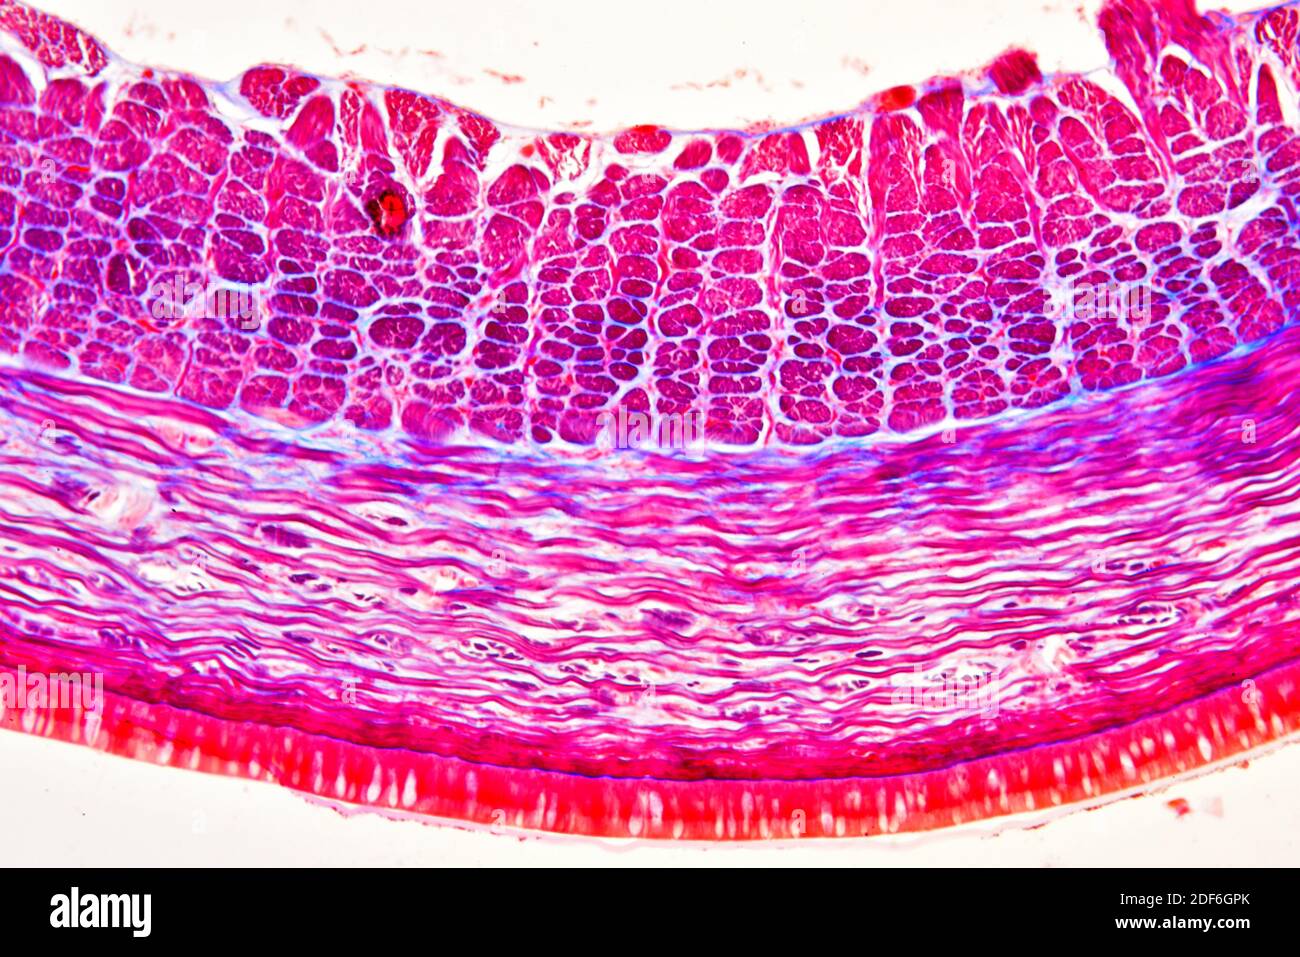 Earthworm (Oligochaeta) cross section showing cuticle, epidermis and circular and longitudinal muscles. Optical microscope X100. Stock Photo